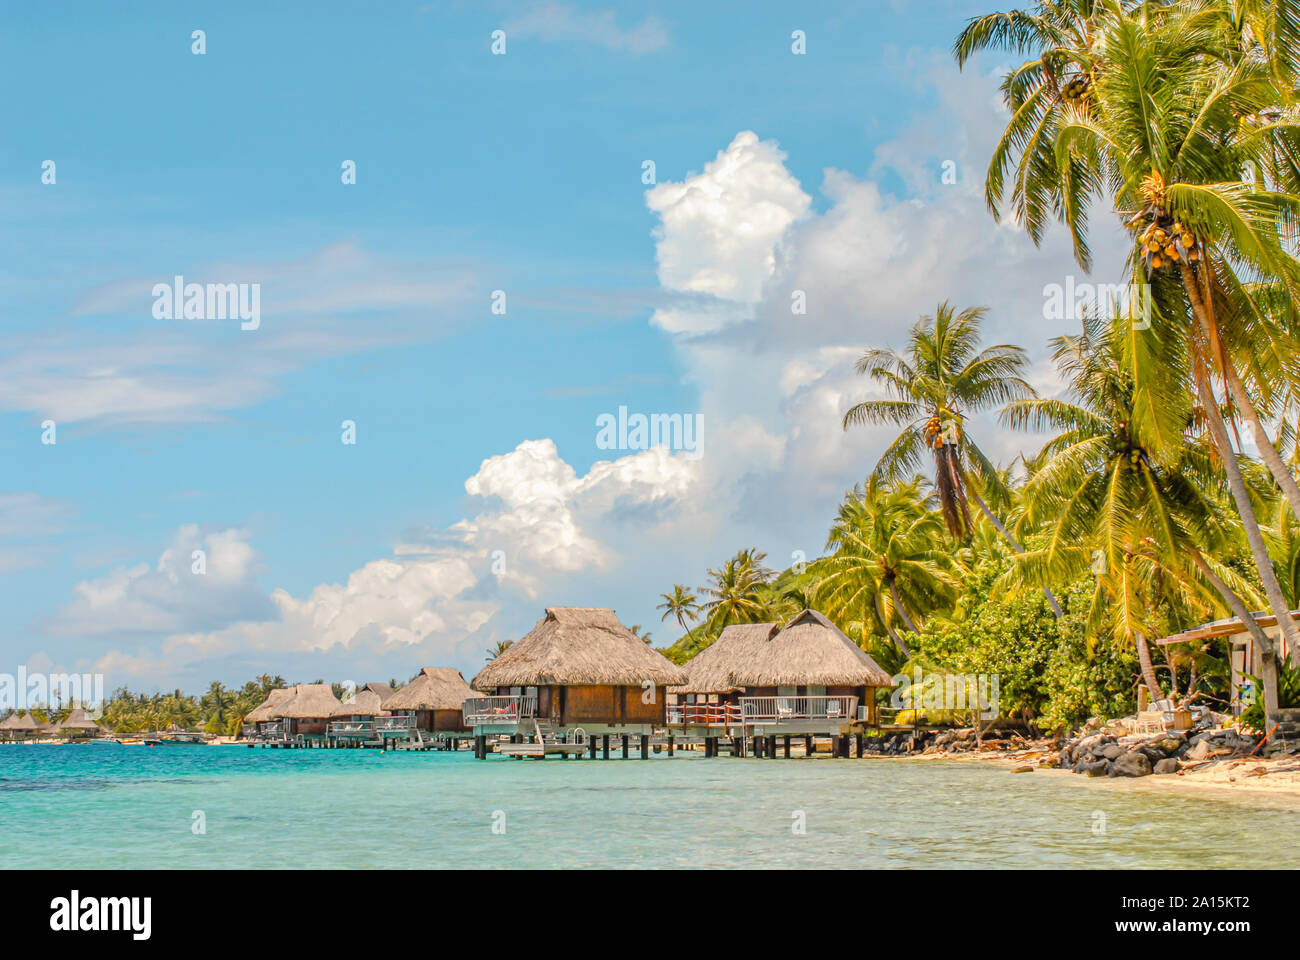 Island resort in a lagoon at Bora Bora Island, French Polynesia Stock Photo